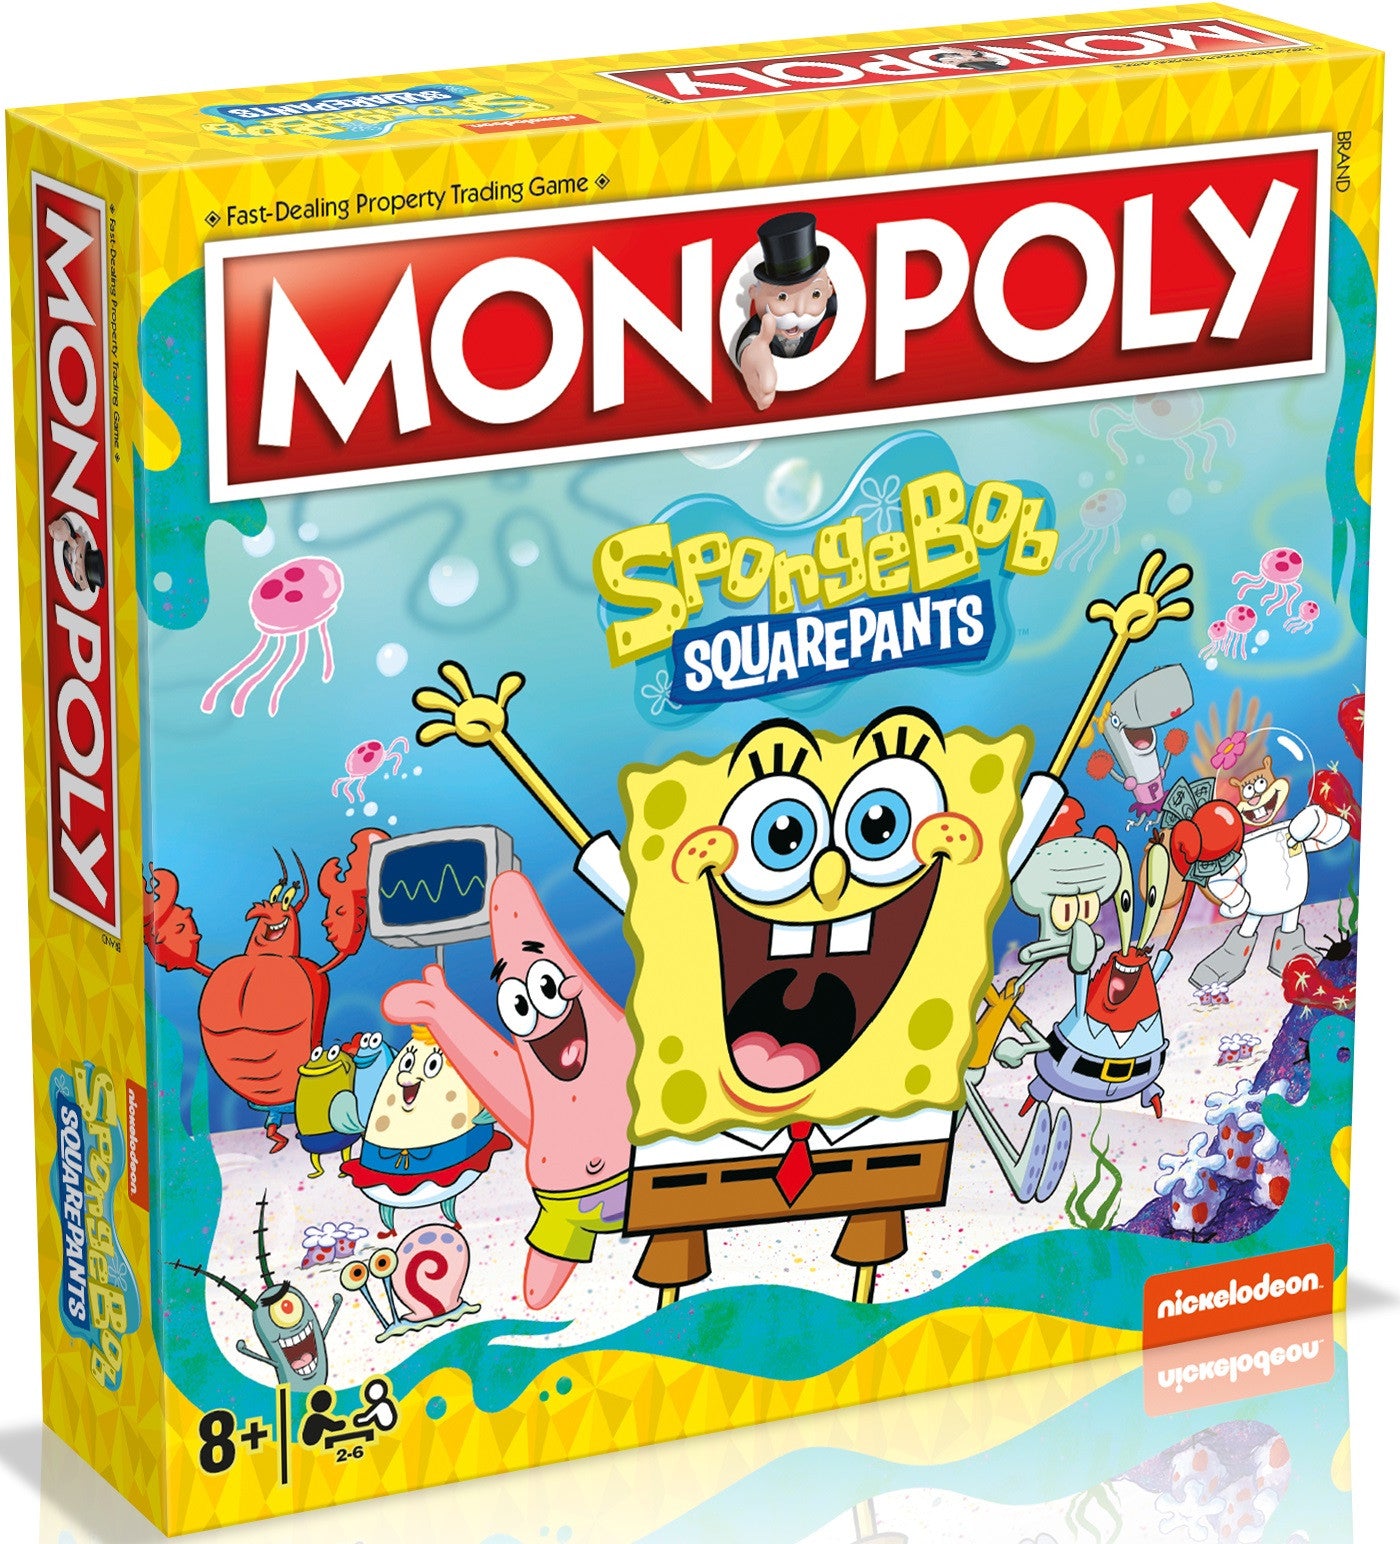 Spongebob Squarepants Monopoly